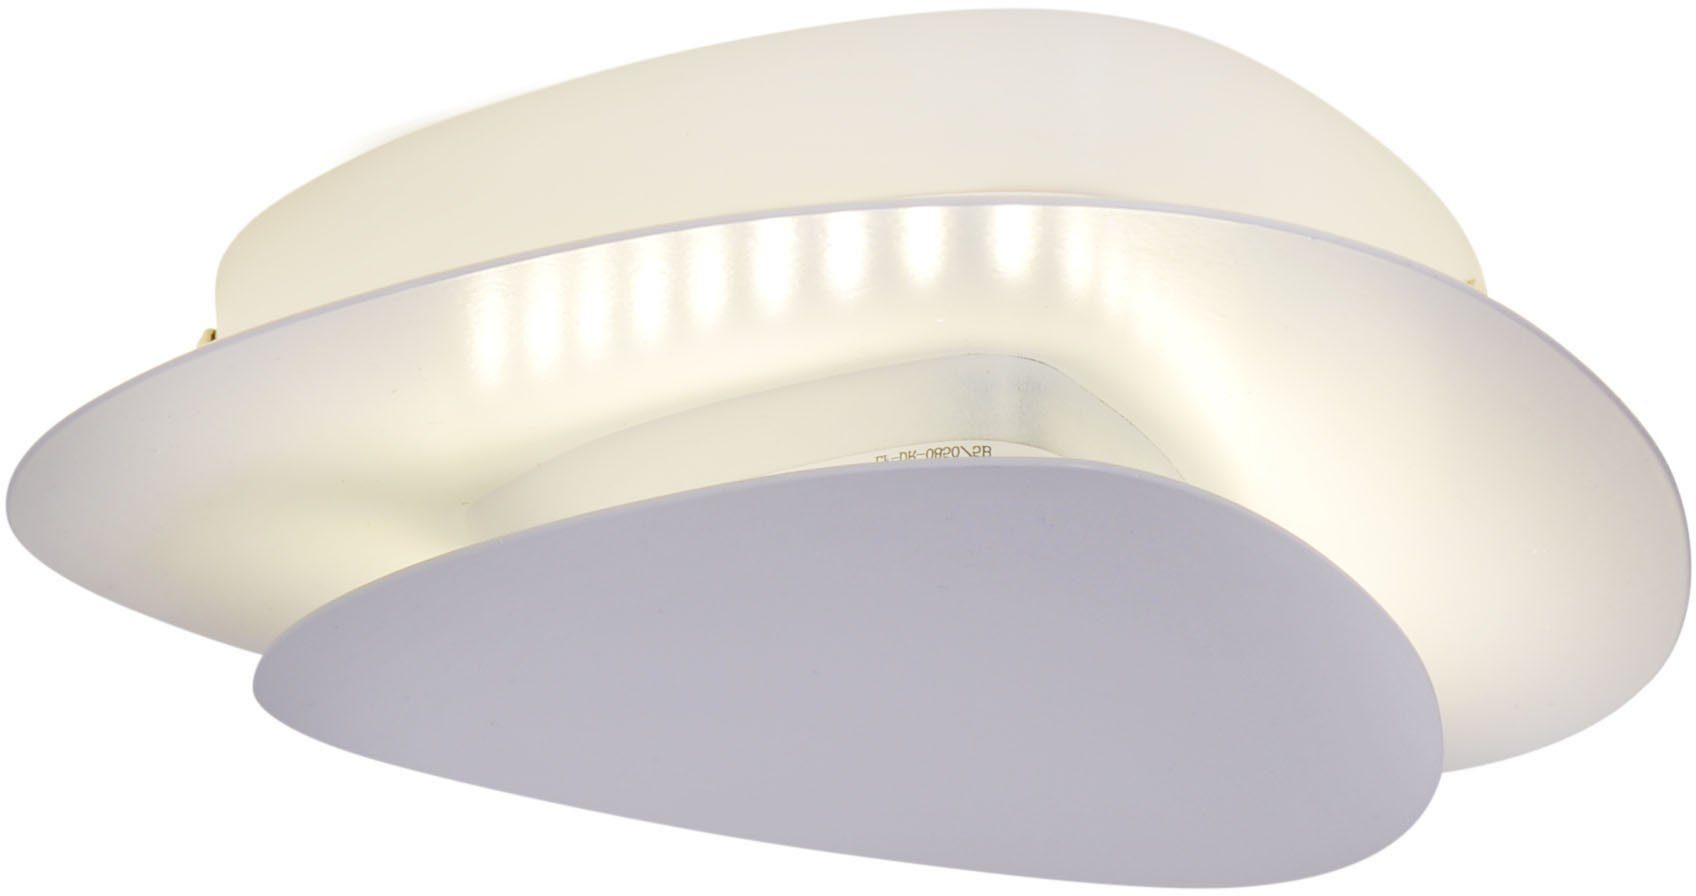 Liso, Energieeffizienzklasse weiß Warmweiß, fest integriert, incl. LED Material: Metall, Deckenleuchte Farbe: G, LED näve Treiber,